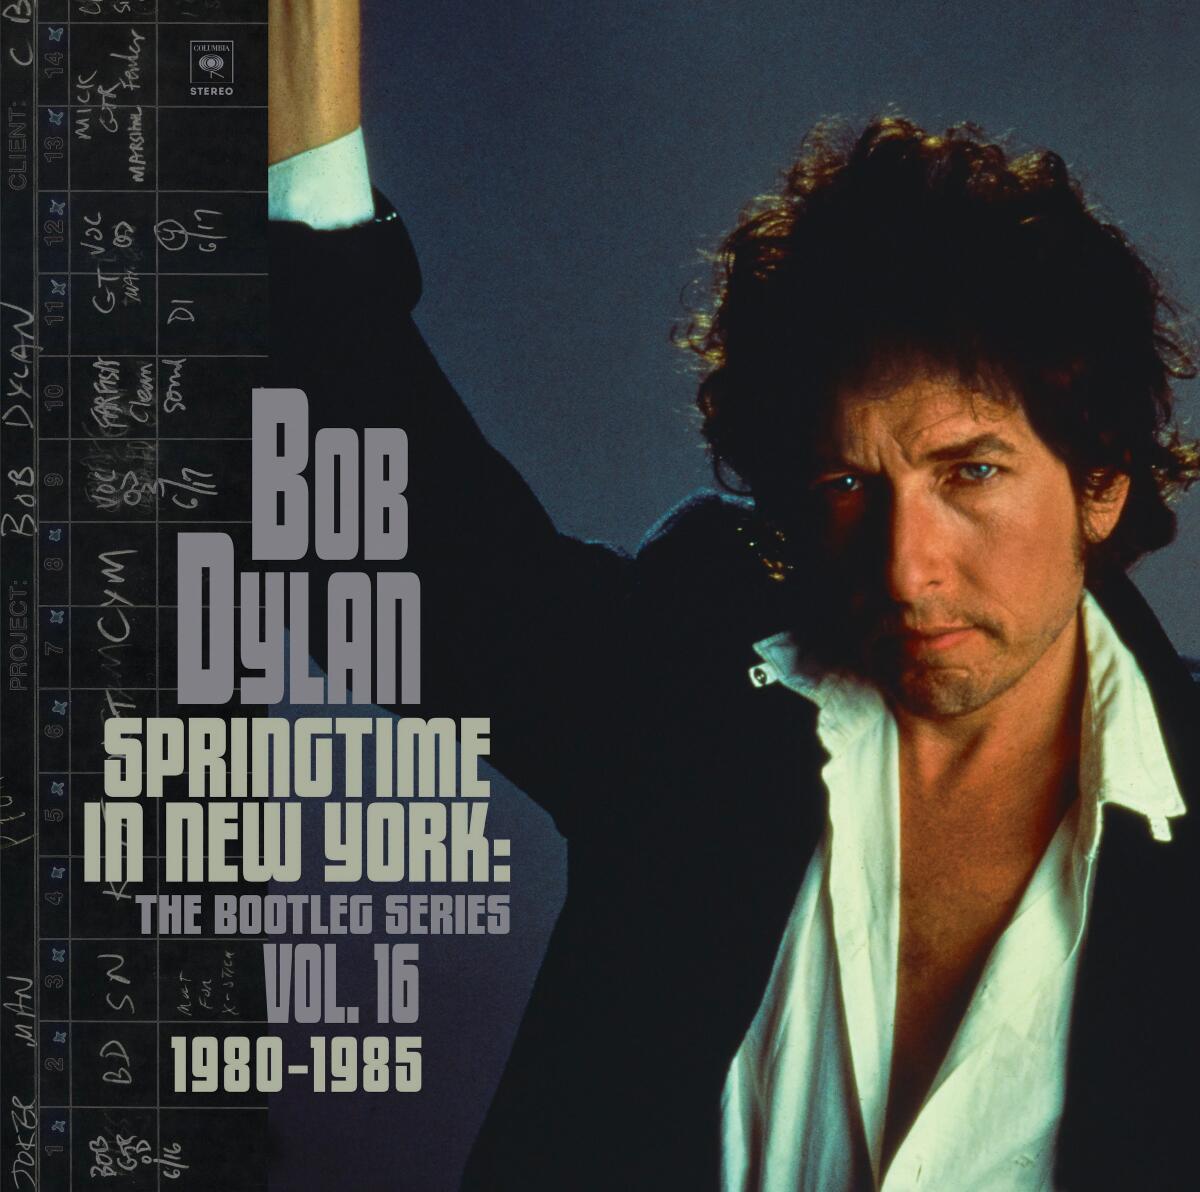 Bob Dylan, "Springtime In New York: The Bootleg Series Vol. 16, 1980-1985" (Columbia/Legacy)